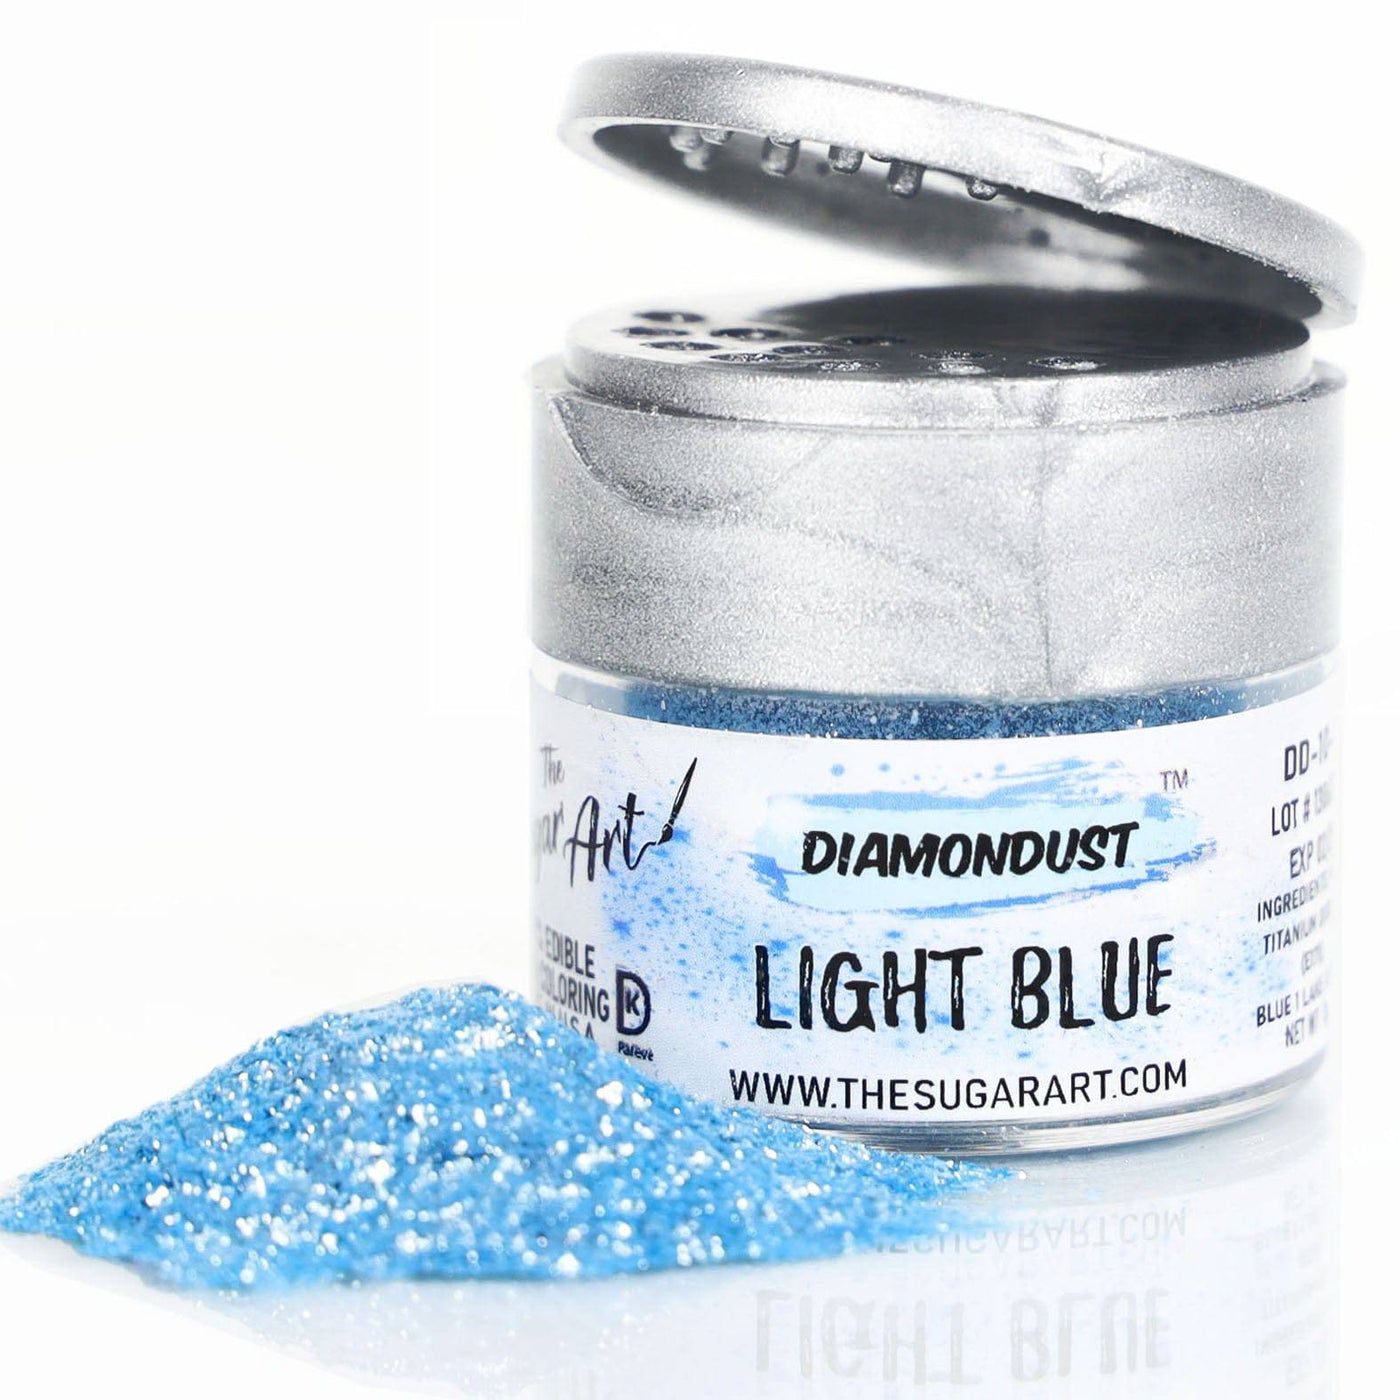 Light Blue Edible Glitter - The Sugar Art, Inc.